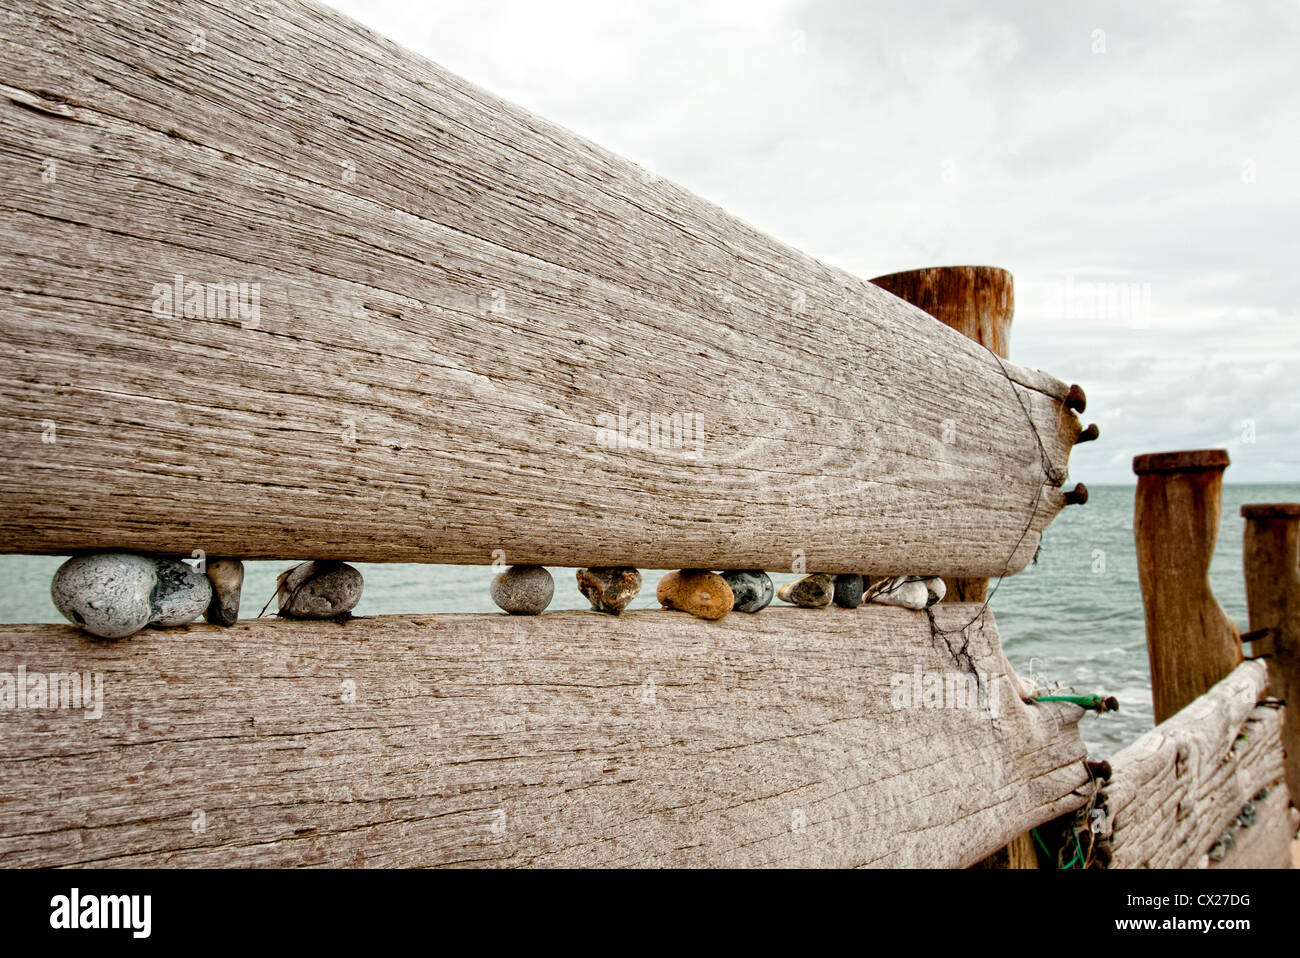 weathered old wooden breakwater groynes sea defence Stock Photo